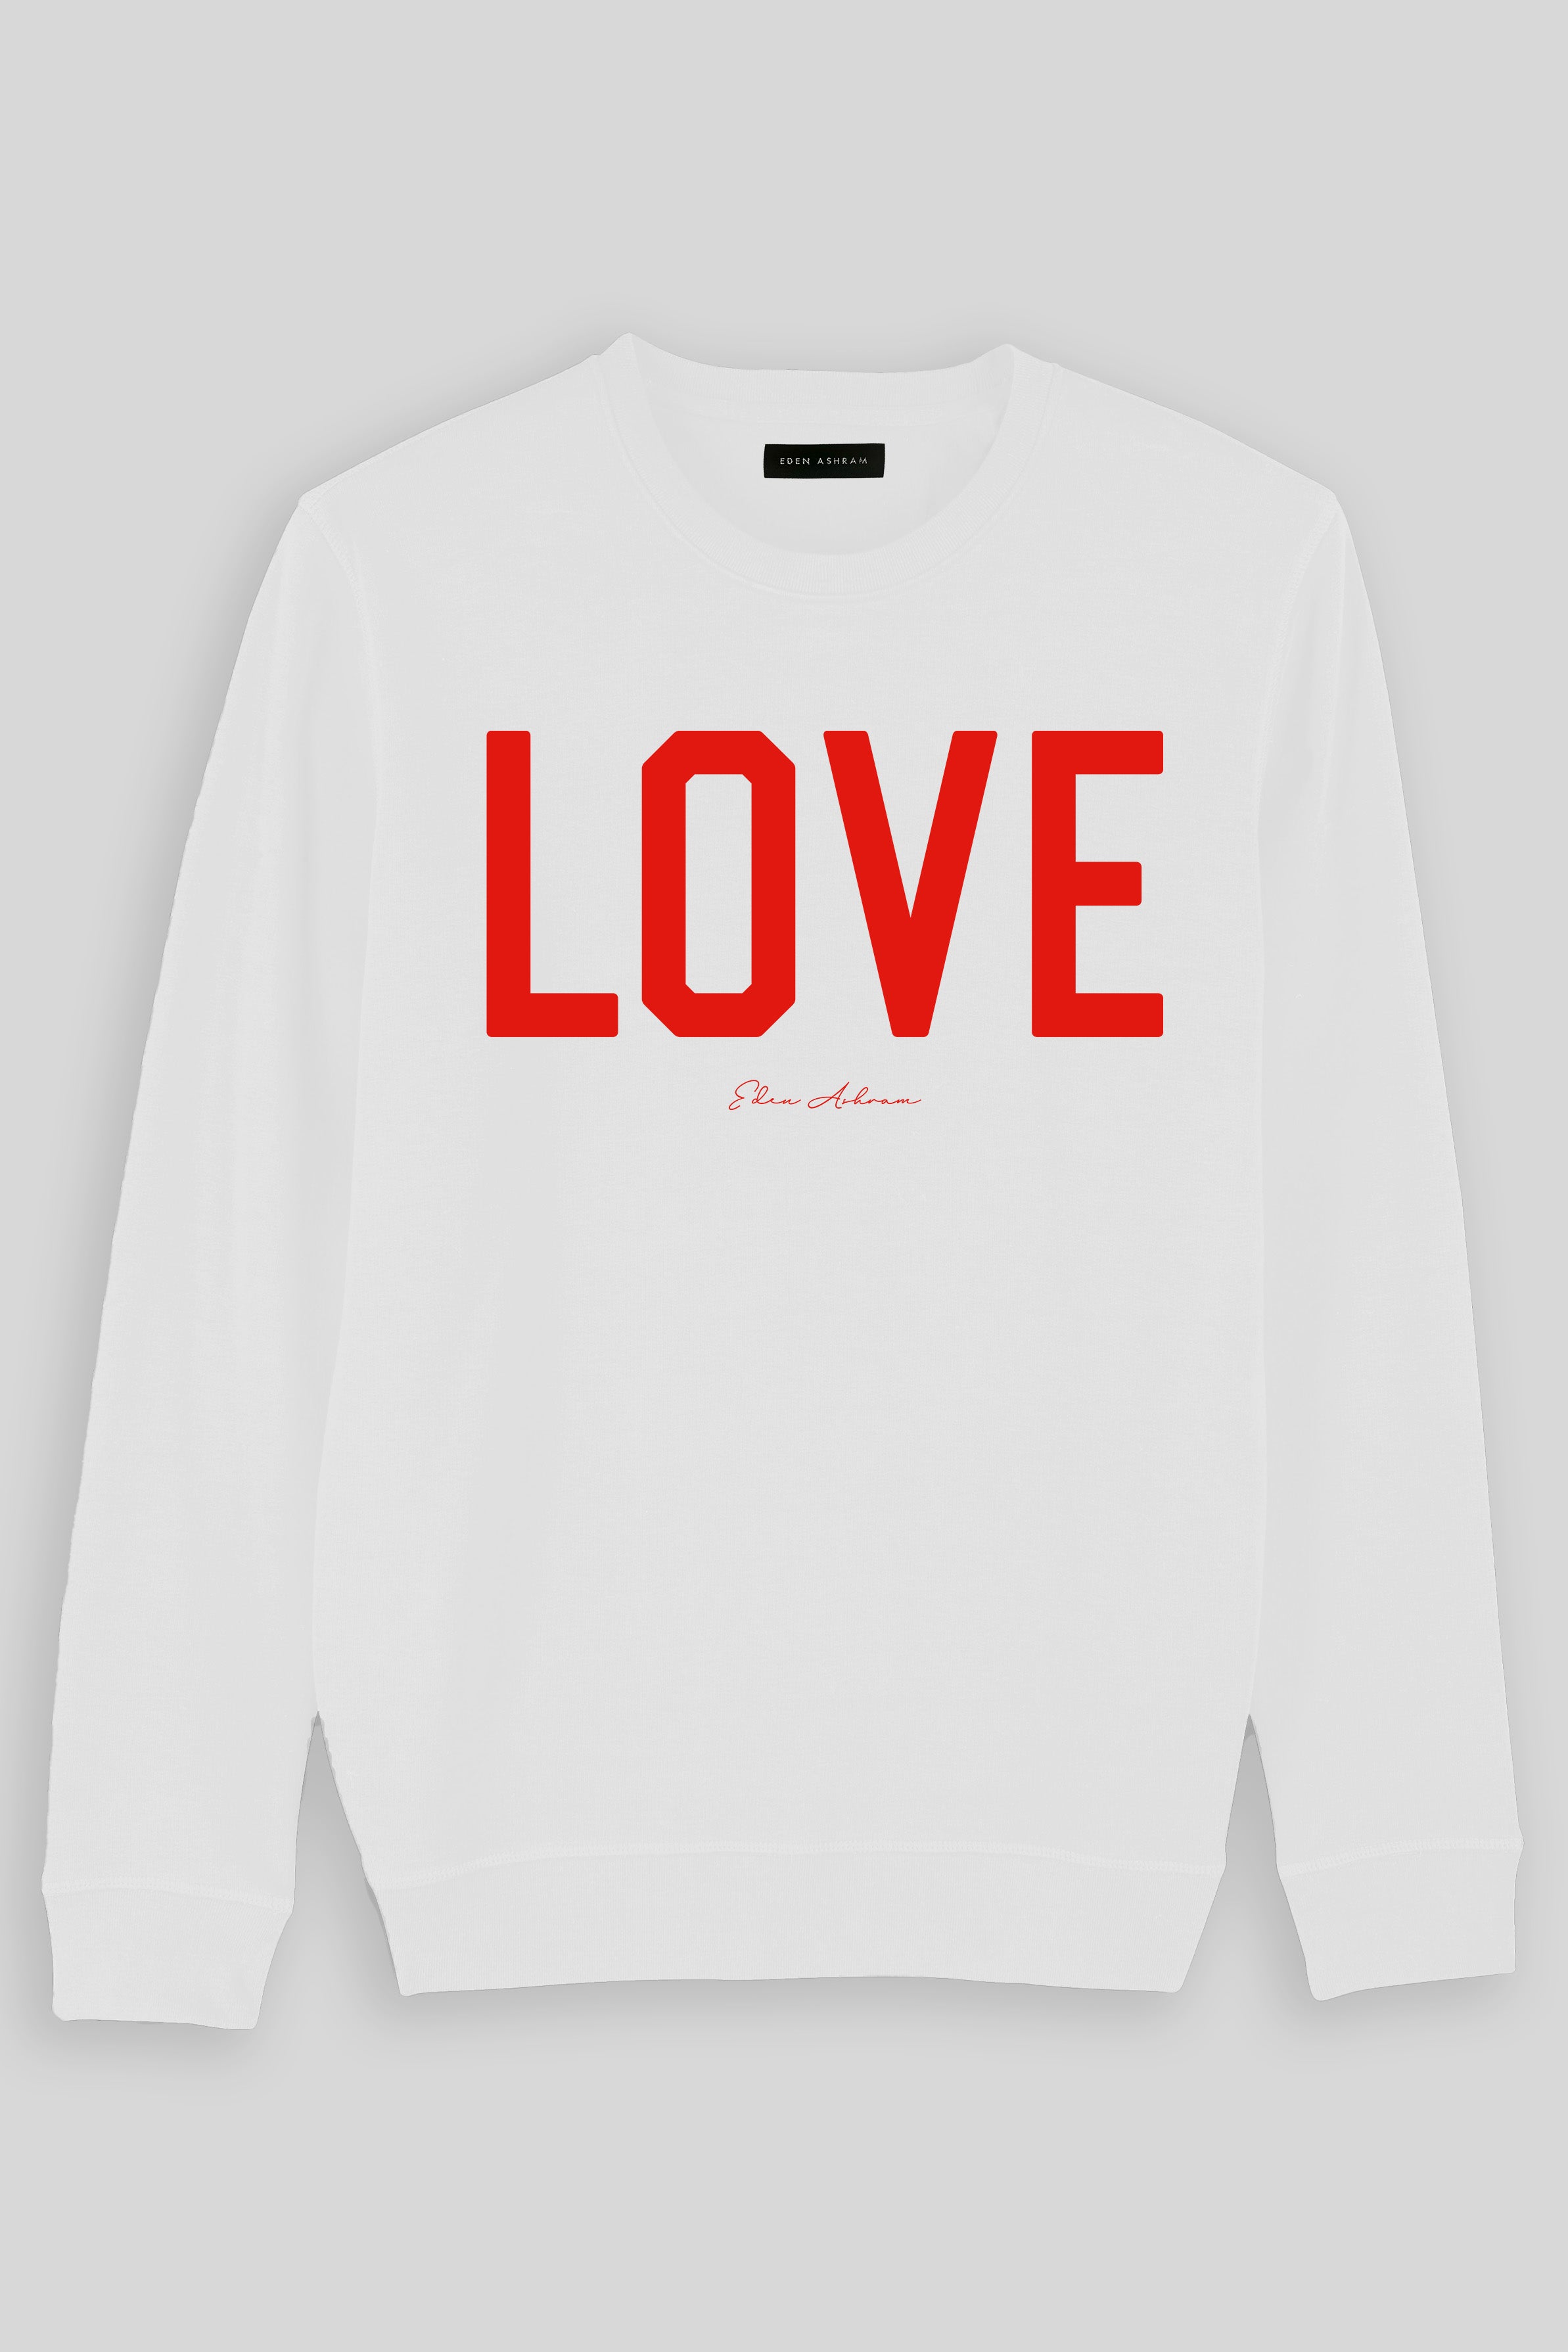 EDEN ASHRAM Love Premium Crew Neck Sweatshirt White